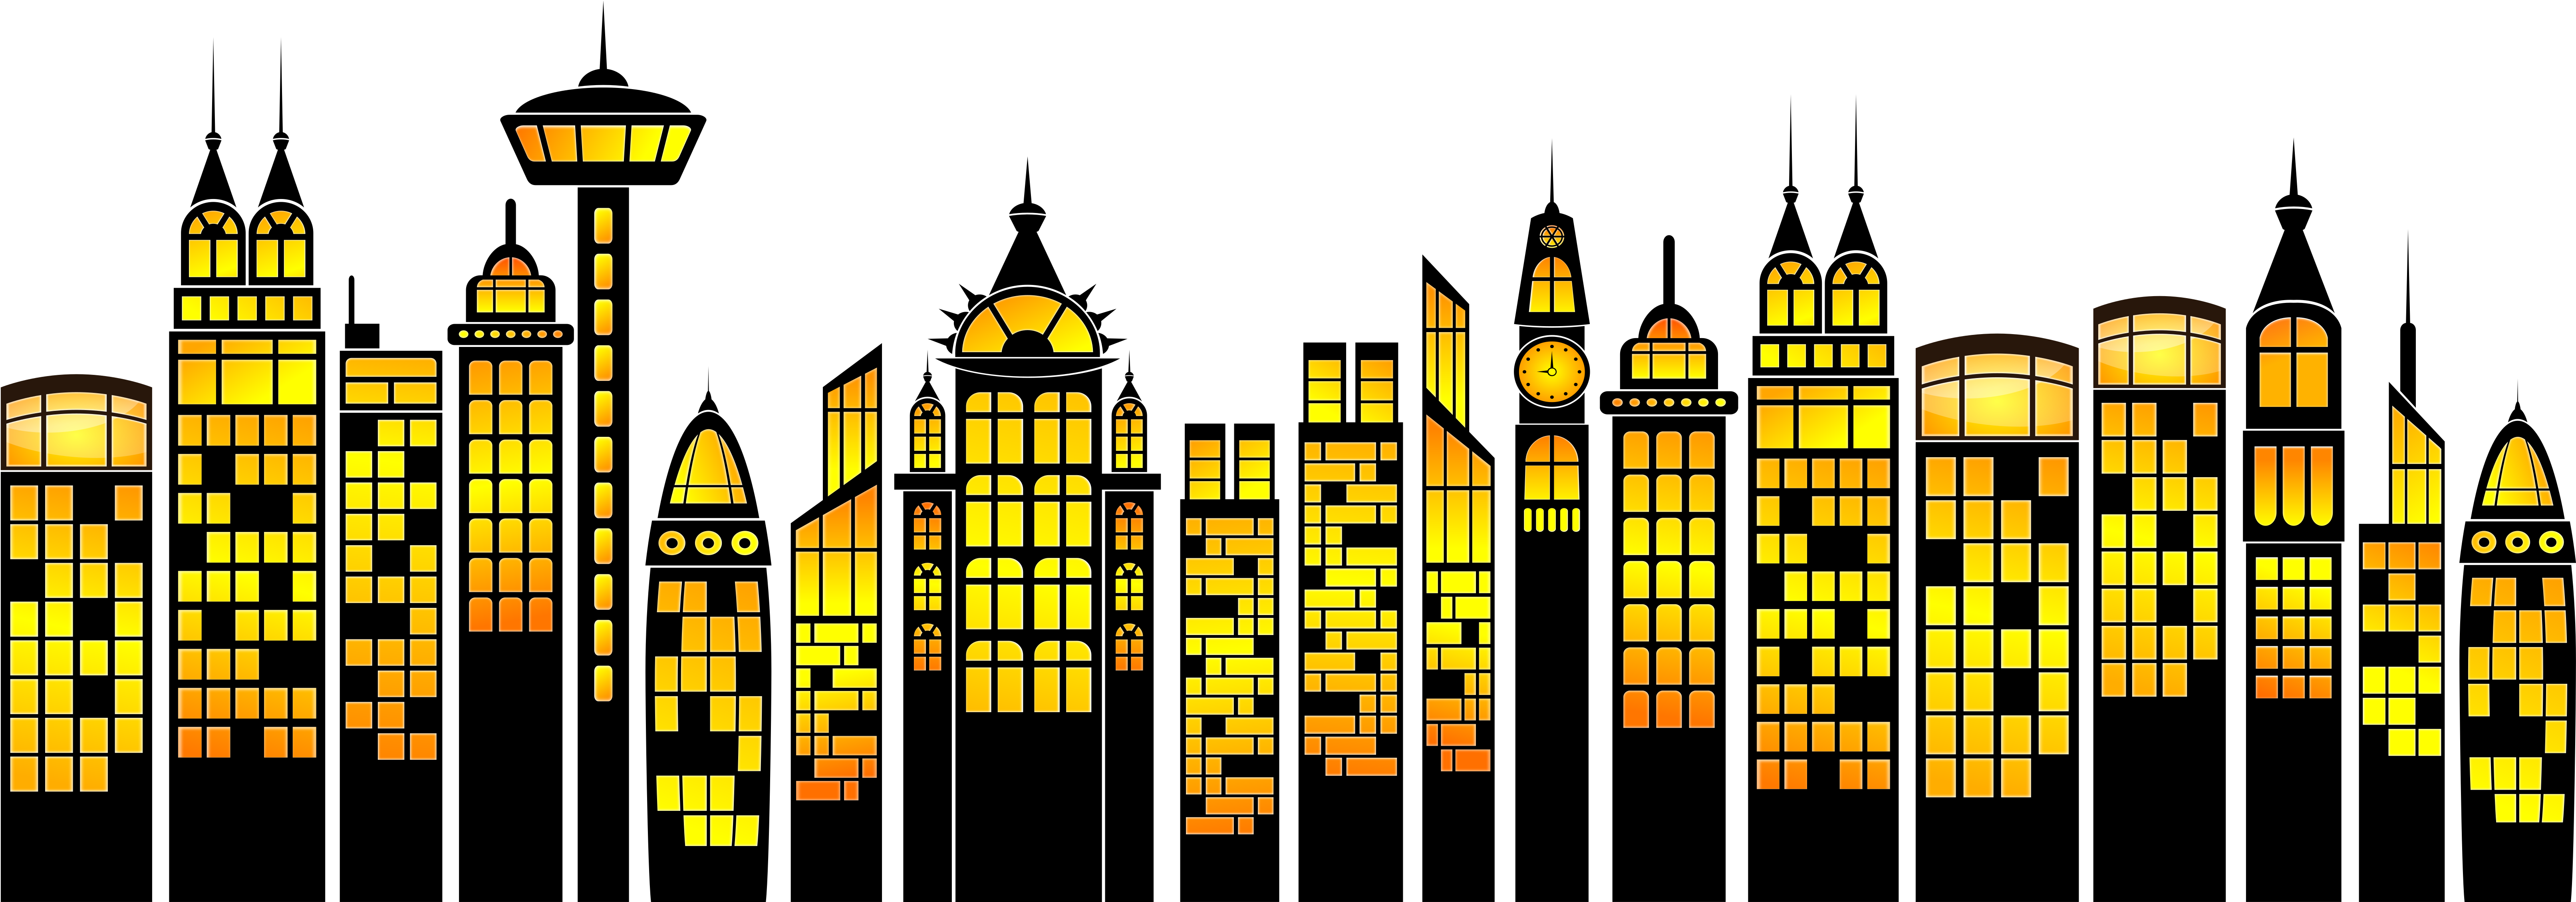 City Skyline Night Illustration